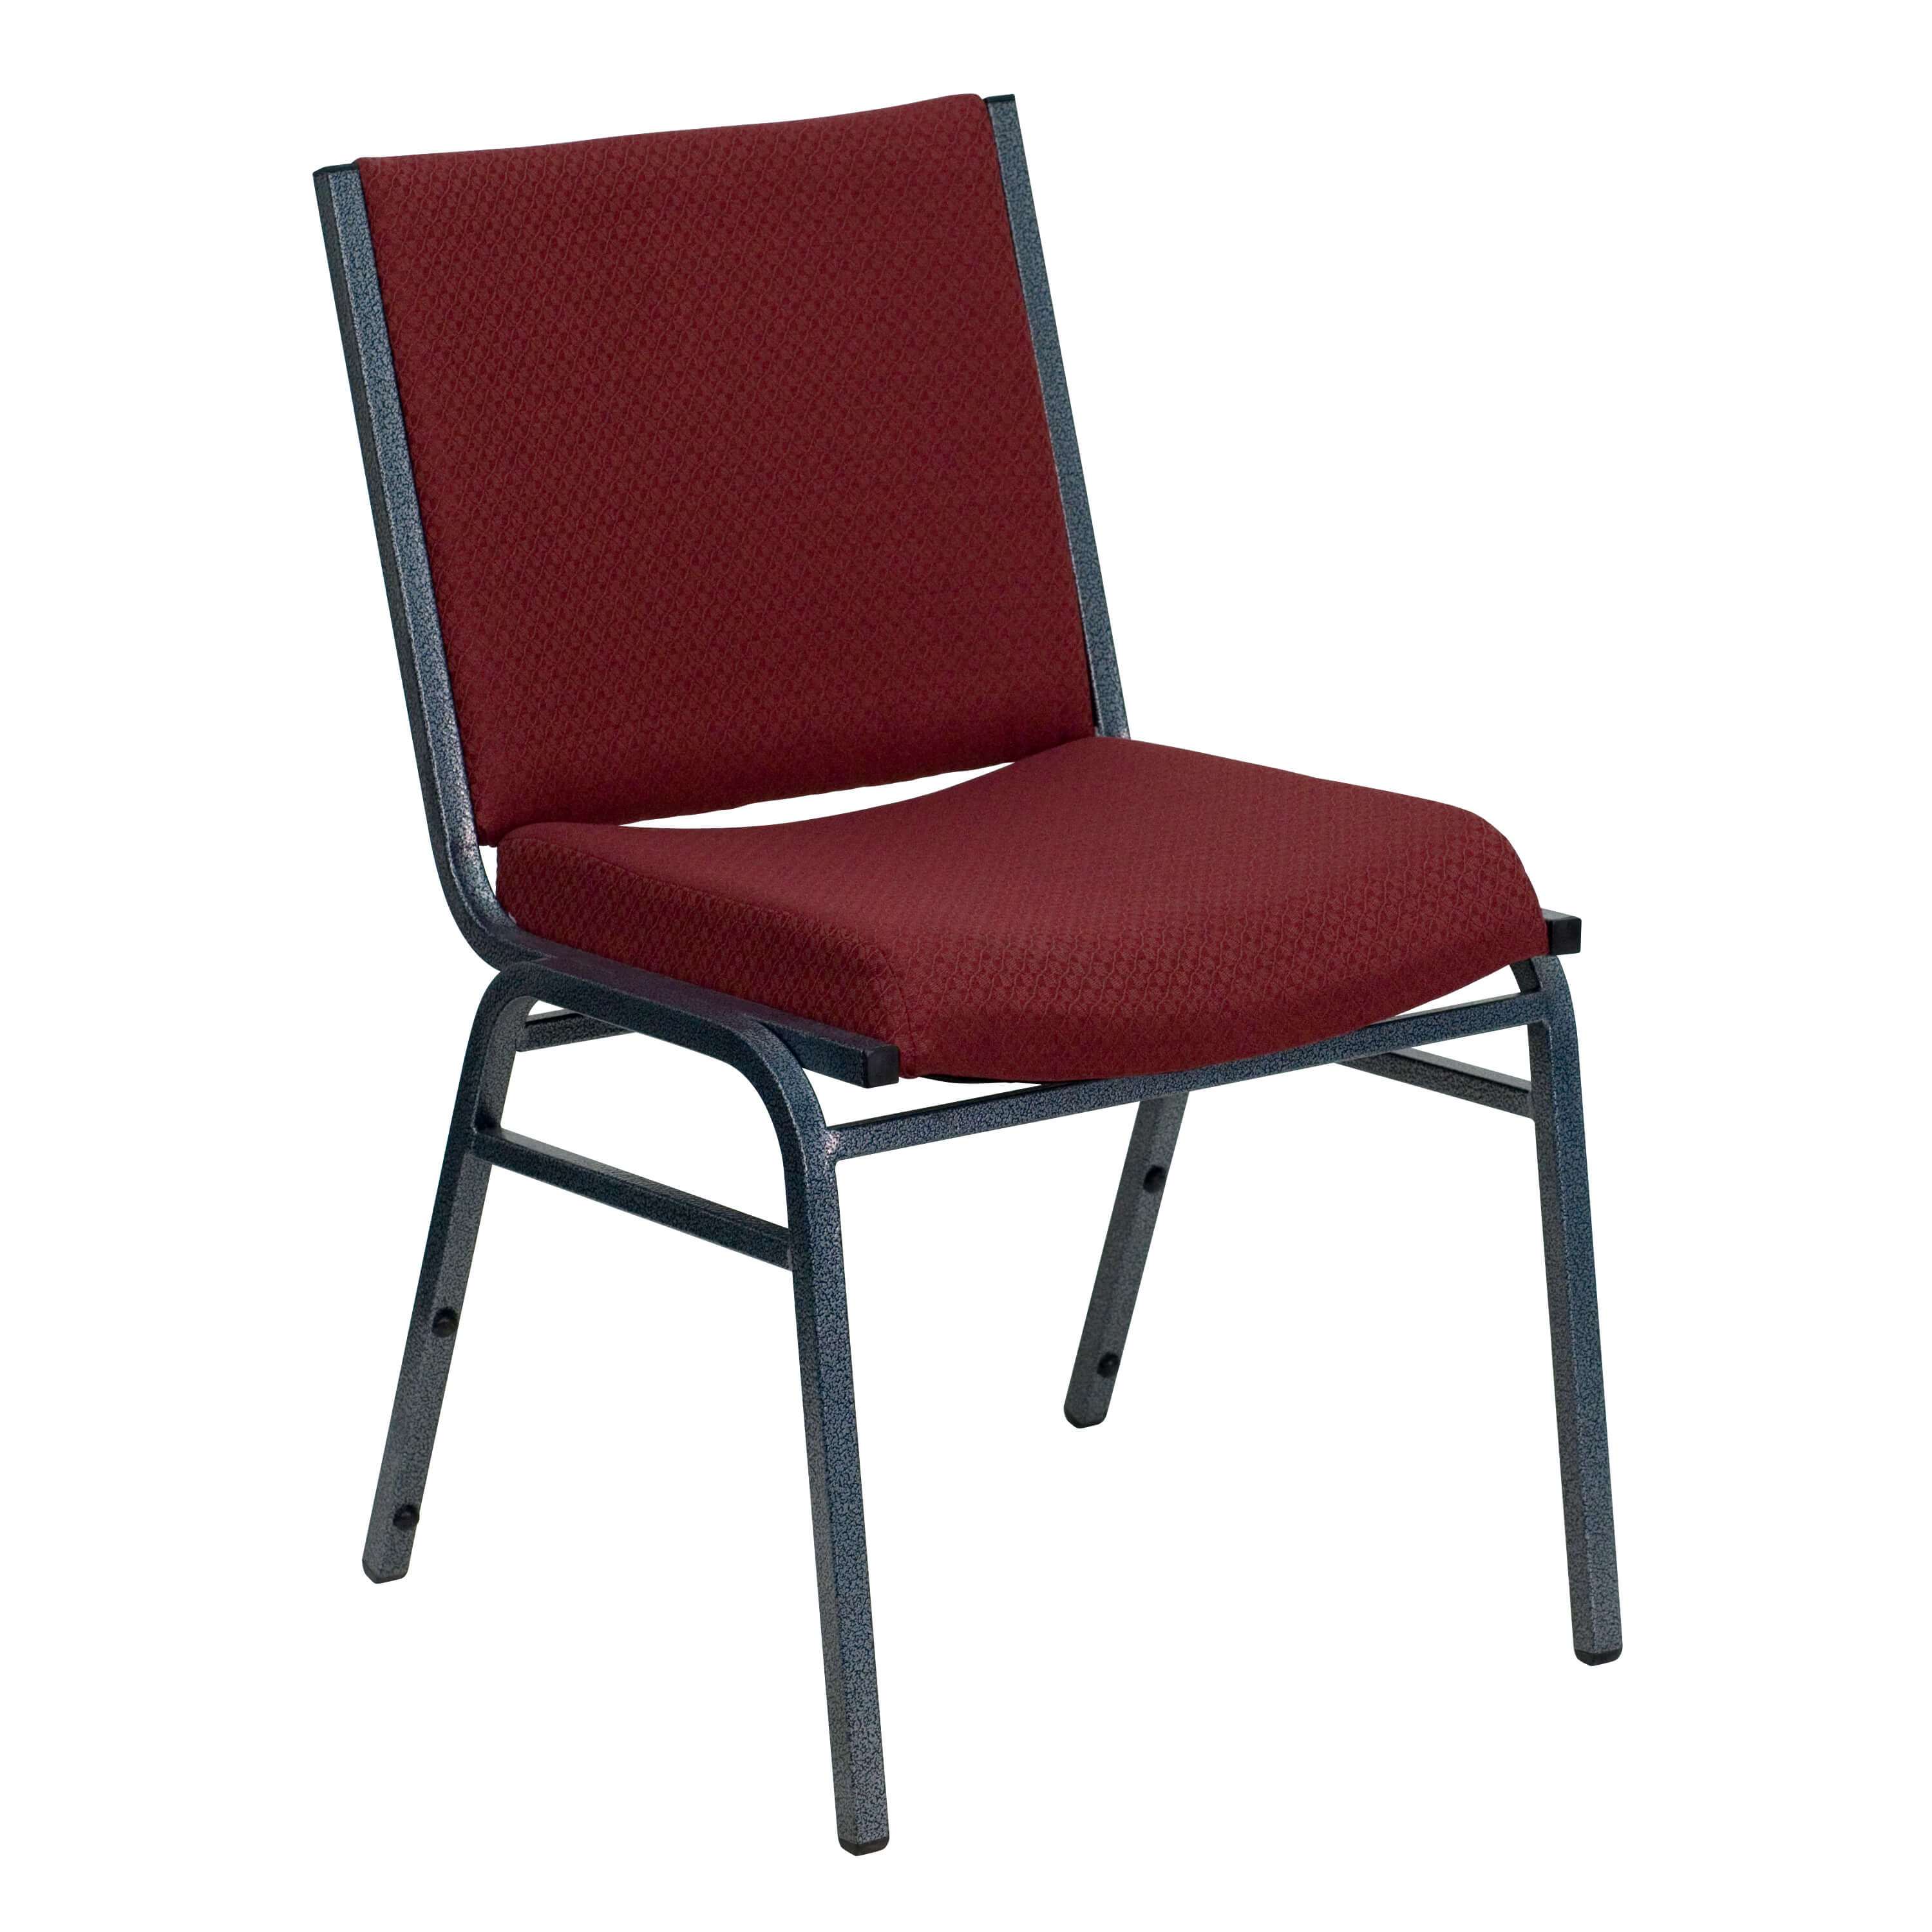 Stackable chairs CUB XU 60153 BY GG FLA